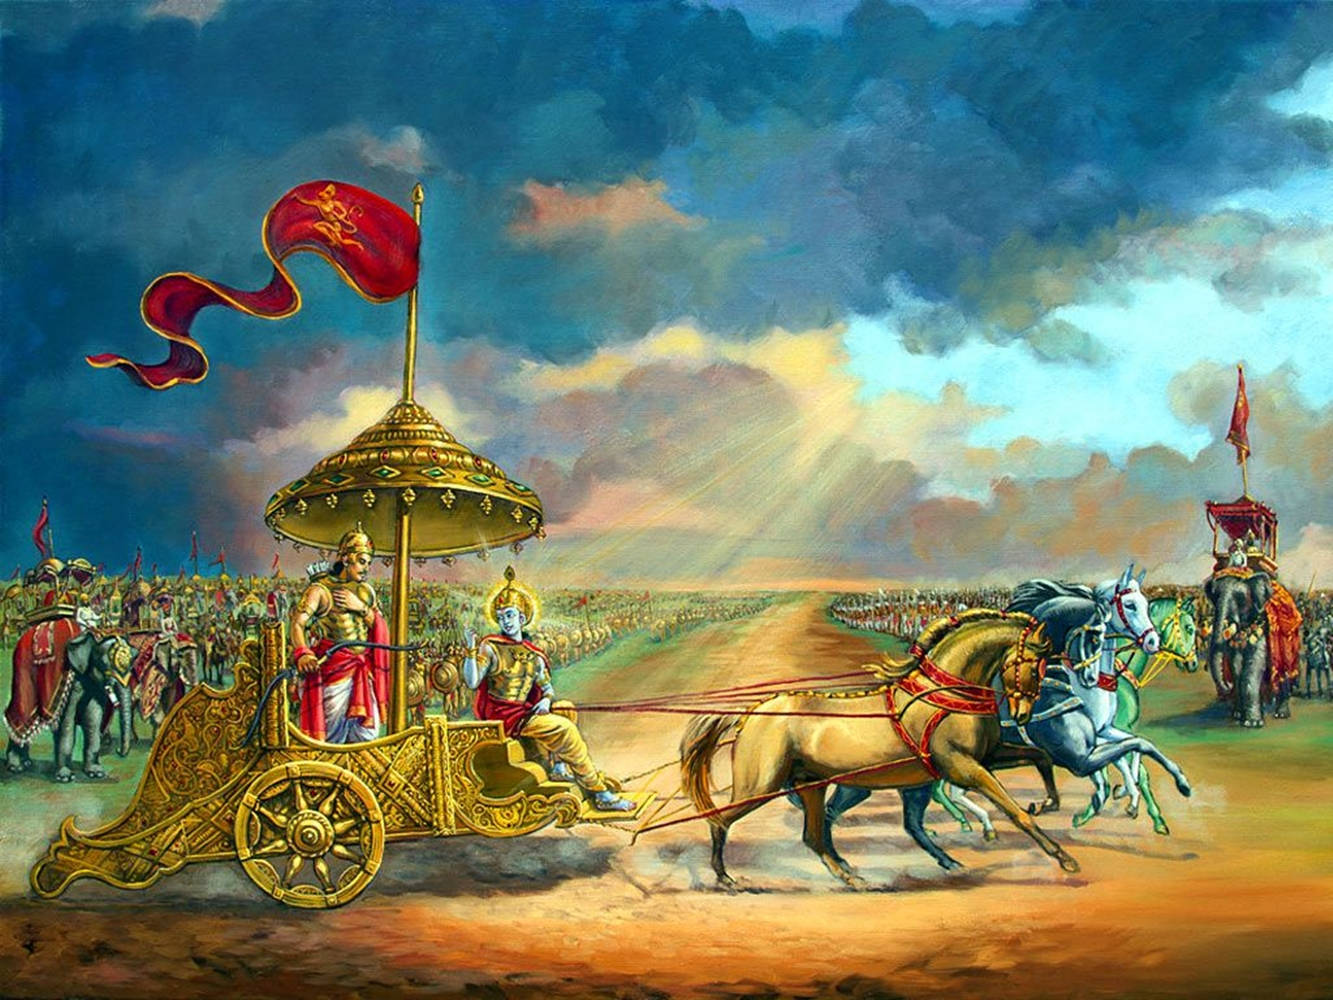 Download Krishna Arjun Leading The Kurukshetra War Wallpaper | Wallpapers .com